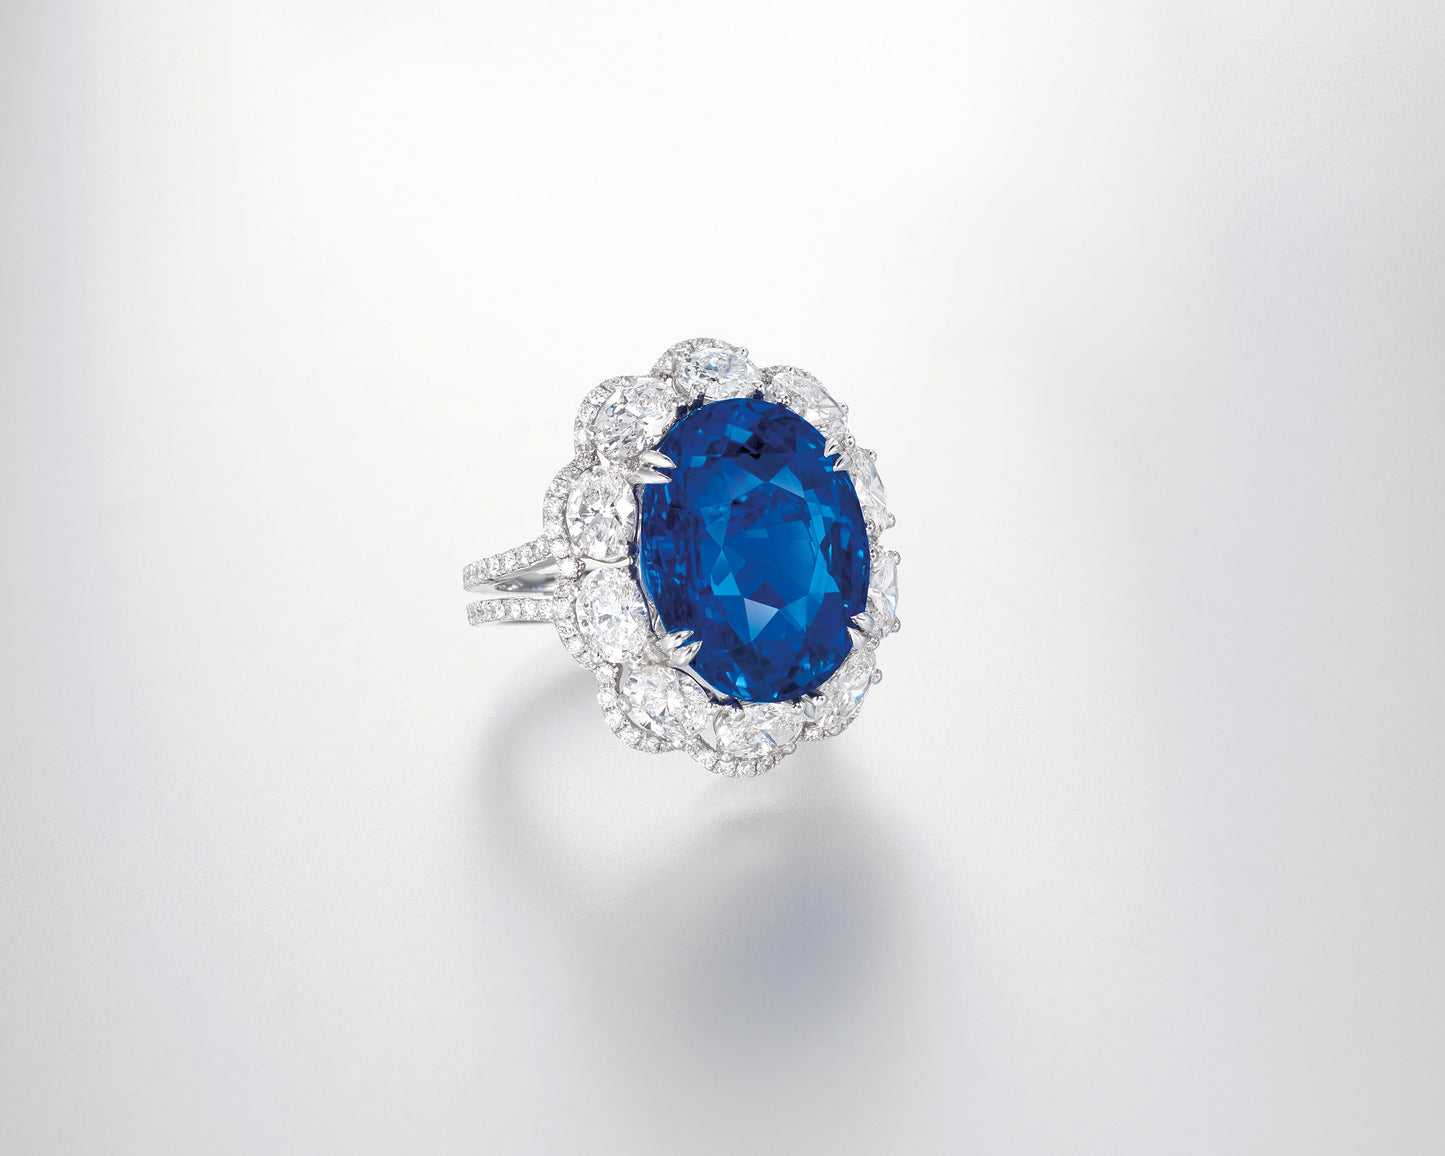 15.12 carat Oval Shape Ceylon Sapphire Ring